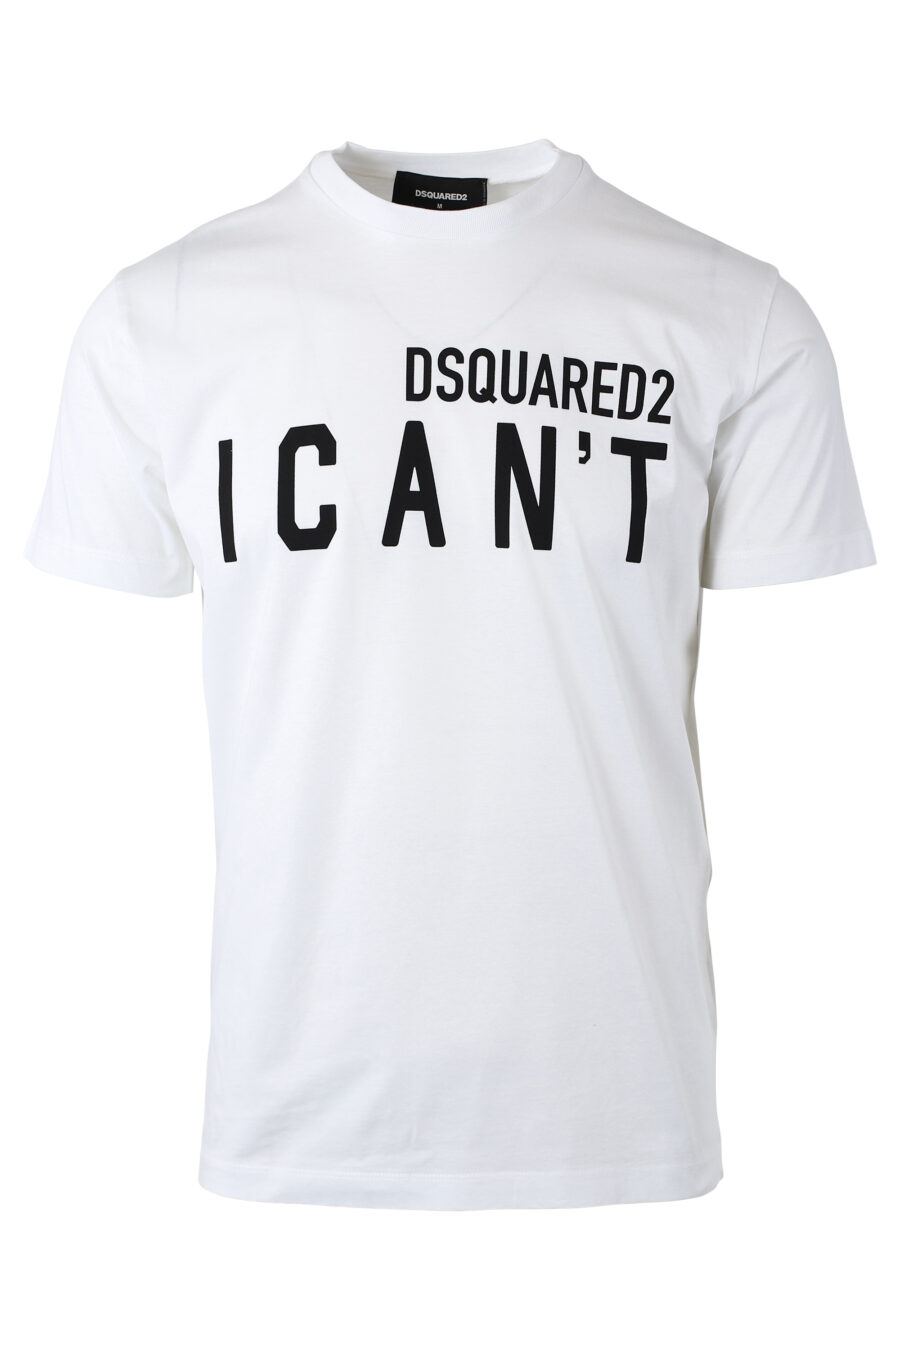 Camiseta blanca con maxilogo "i can't" - IMG 1144